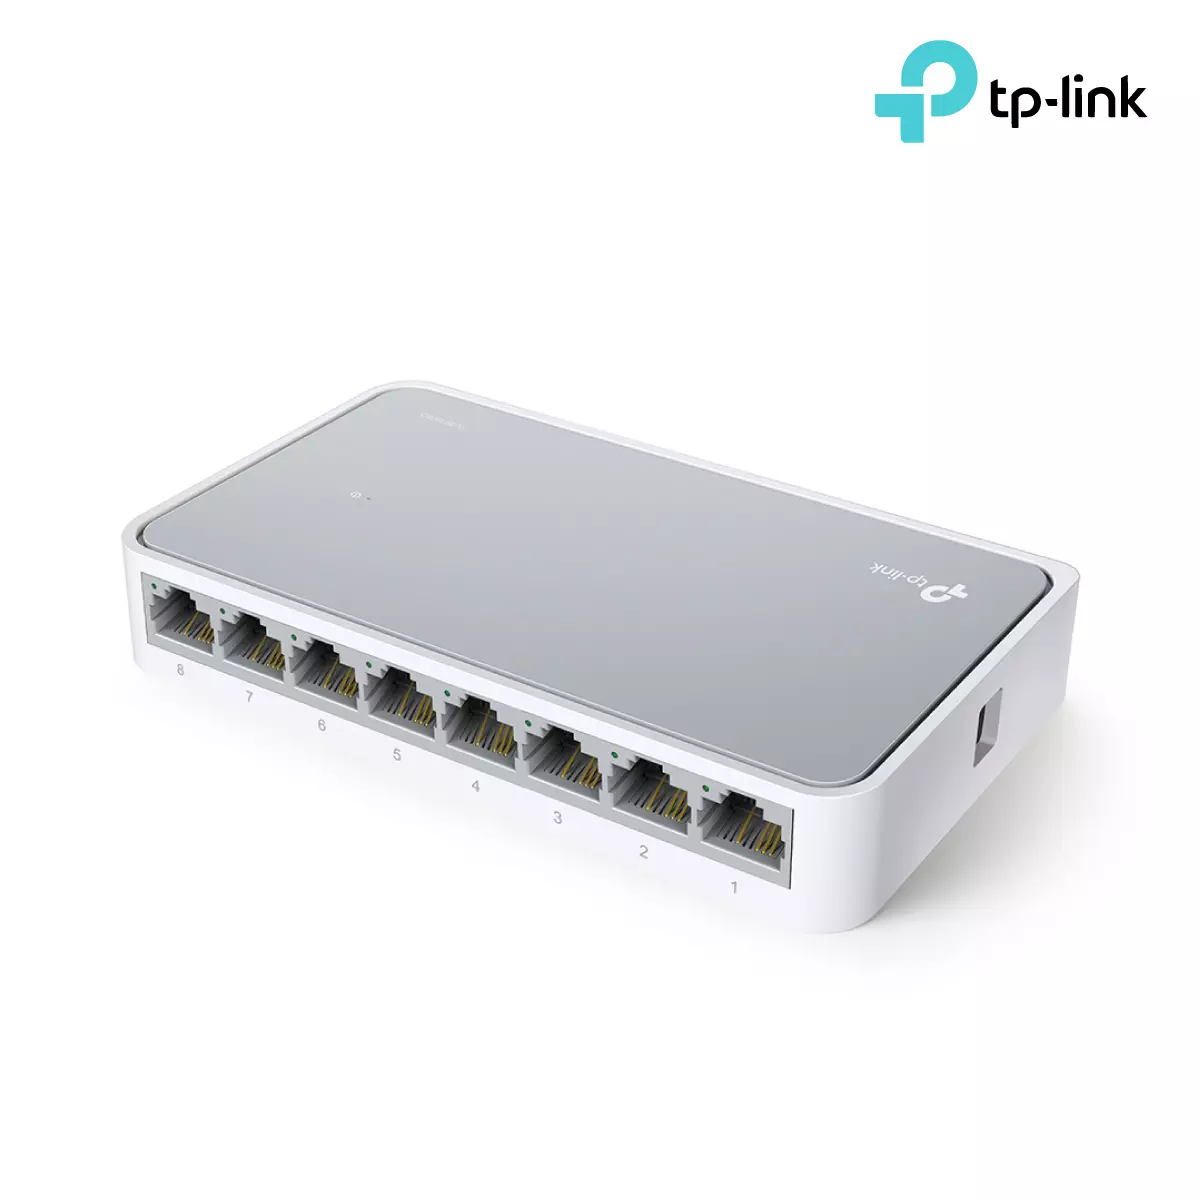 Antena Wifi USB Nano NEXXT - Trescom